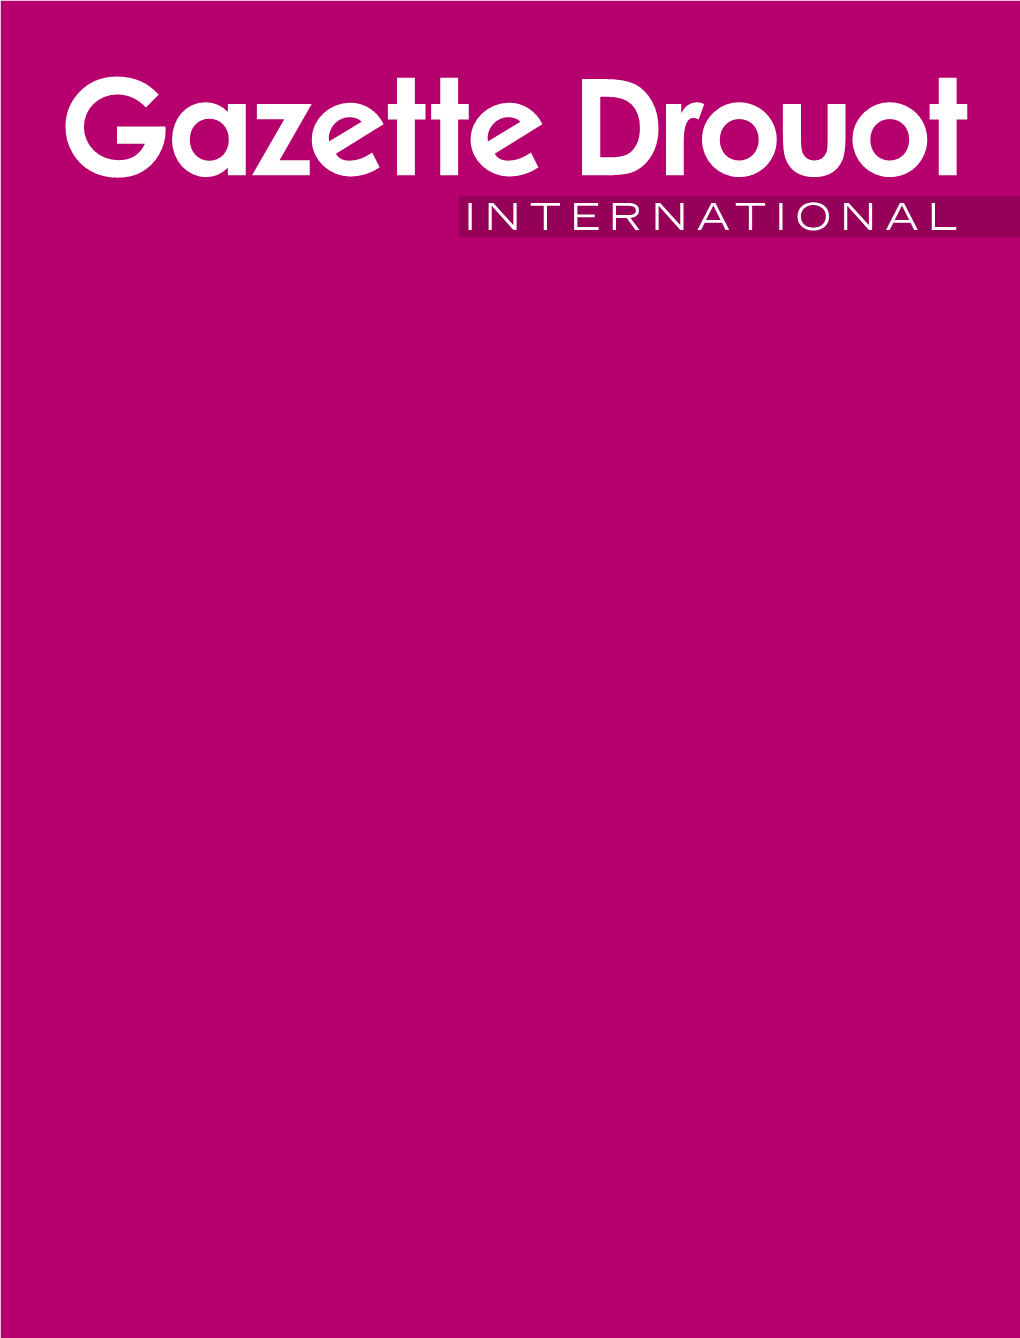 Gazette Drouot INTERNATIONAL GROS & DELETTREZ Auctioneers